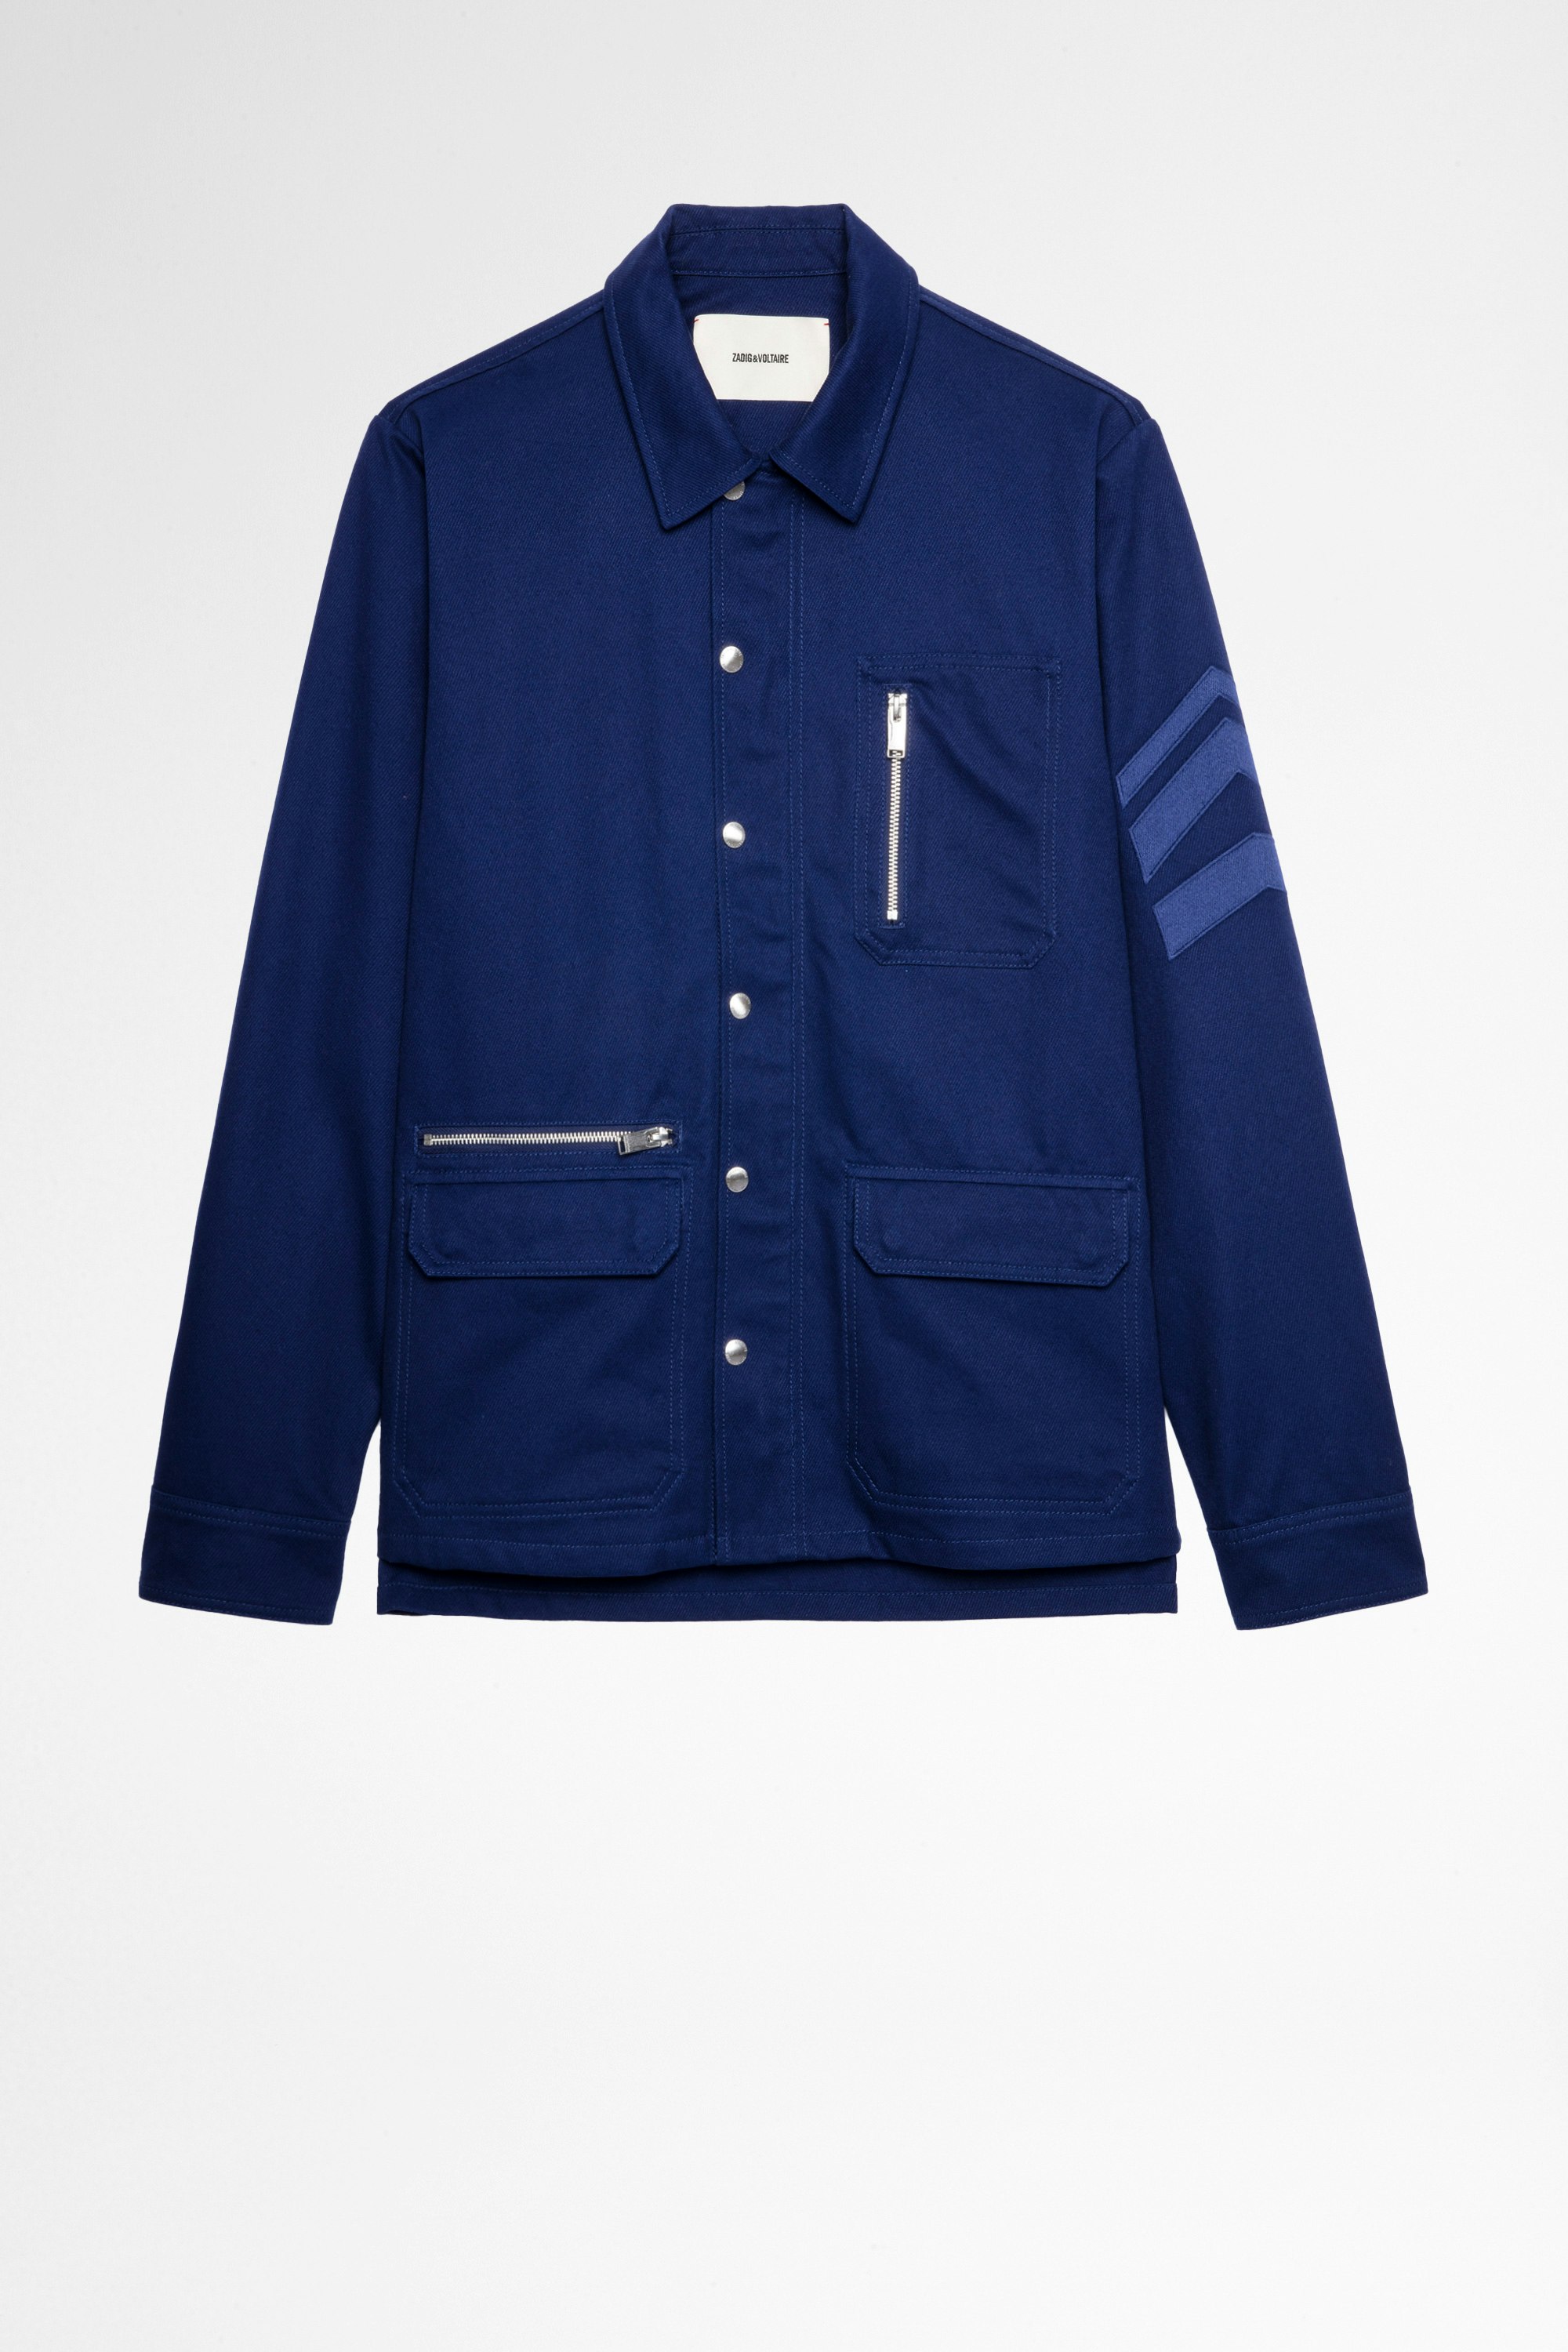 Bertie Jacket Men's royal blue cotton jacket with arrow pattern